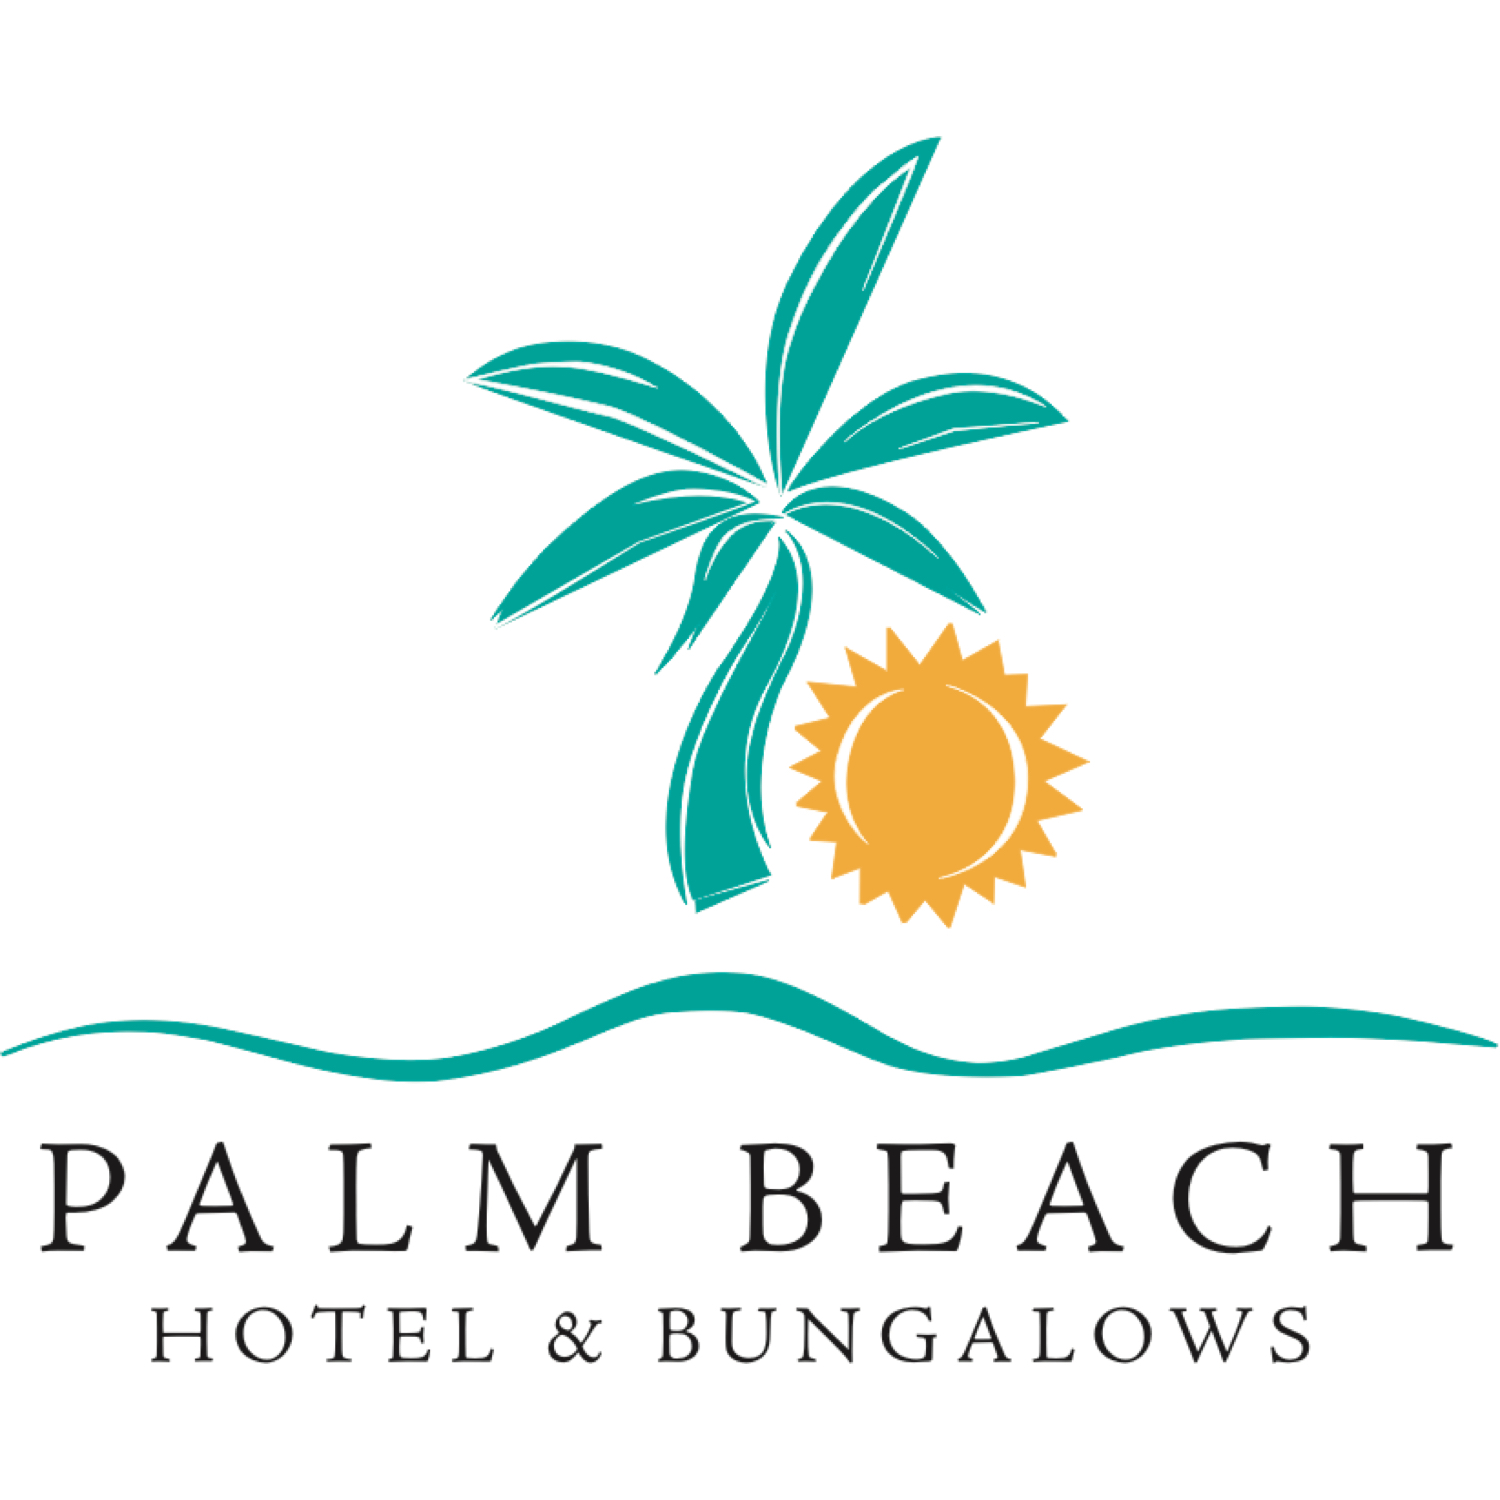 Palm Beach Hotel & Bungalows - Larnaca, Cyprus